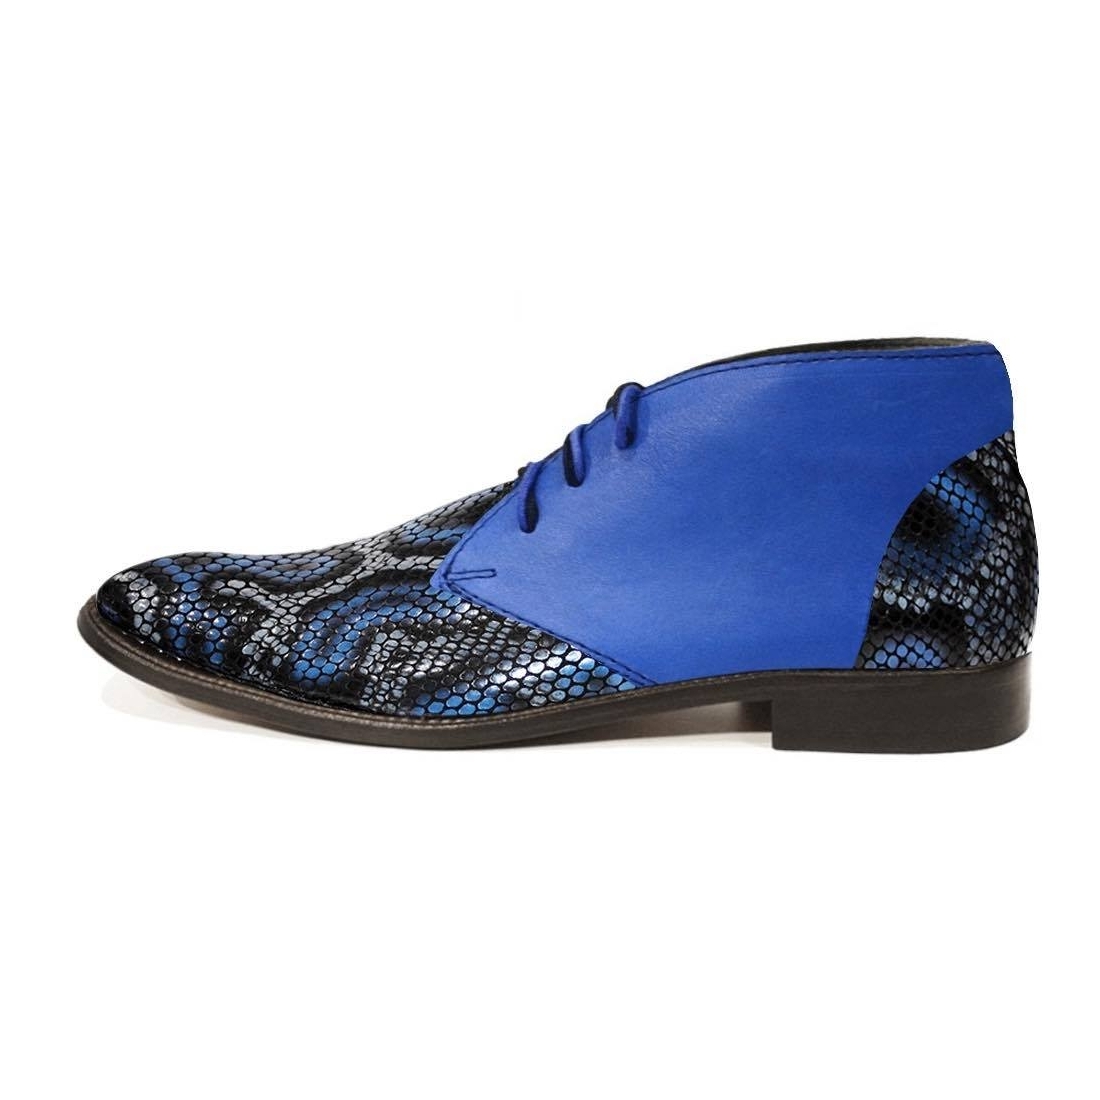 Modello Serpentto - Chukka Botas - Handmade Colorful Italian Leather Shoes